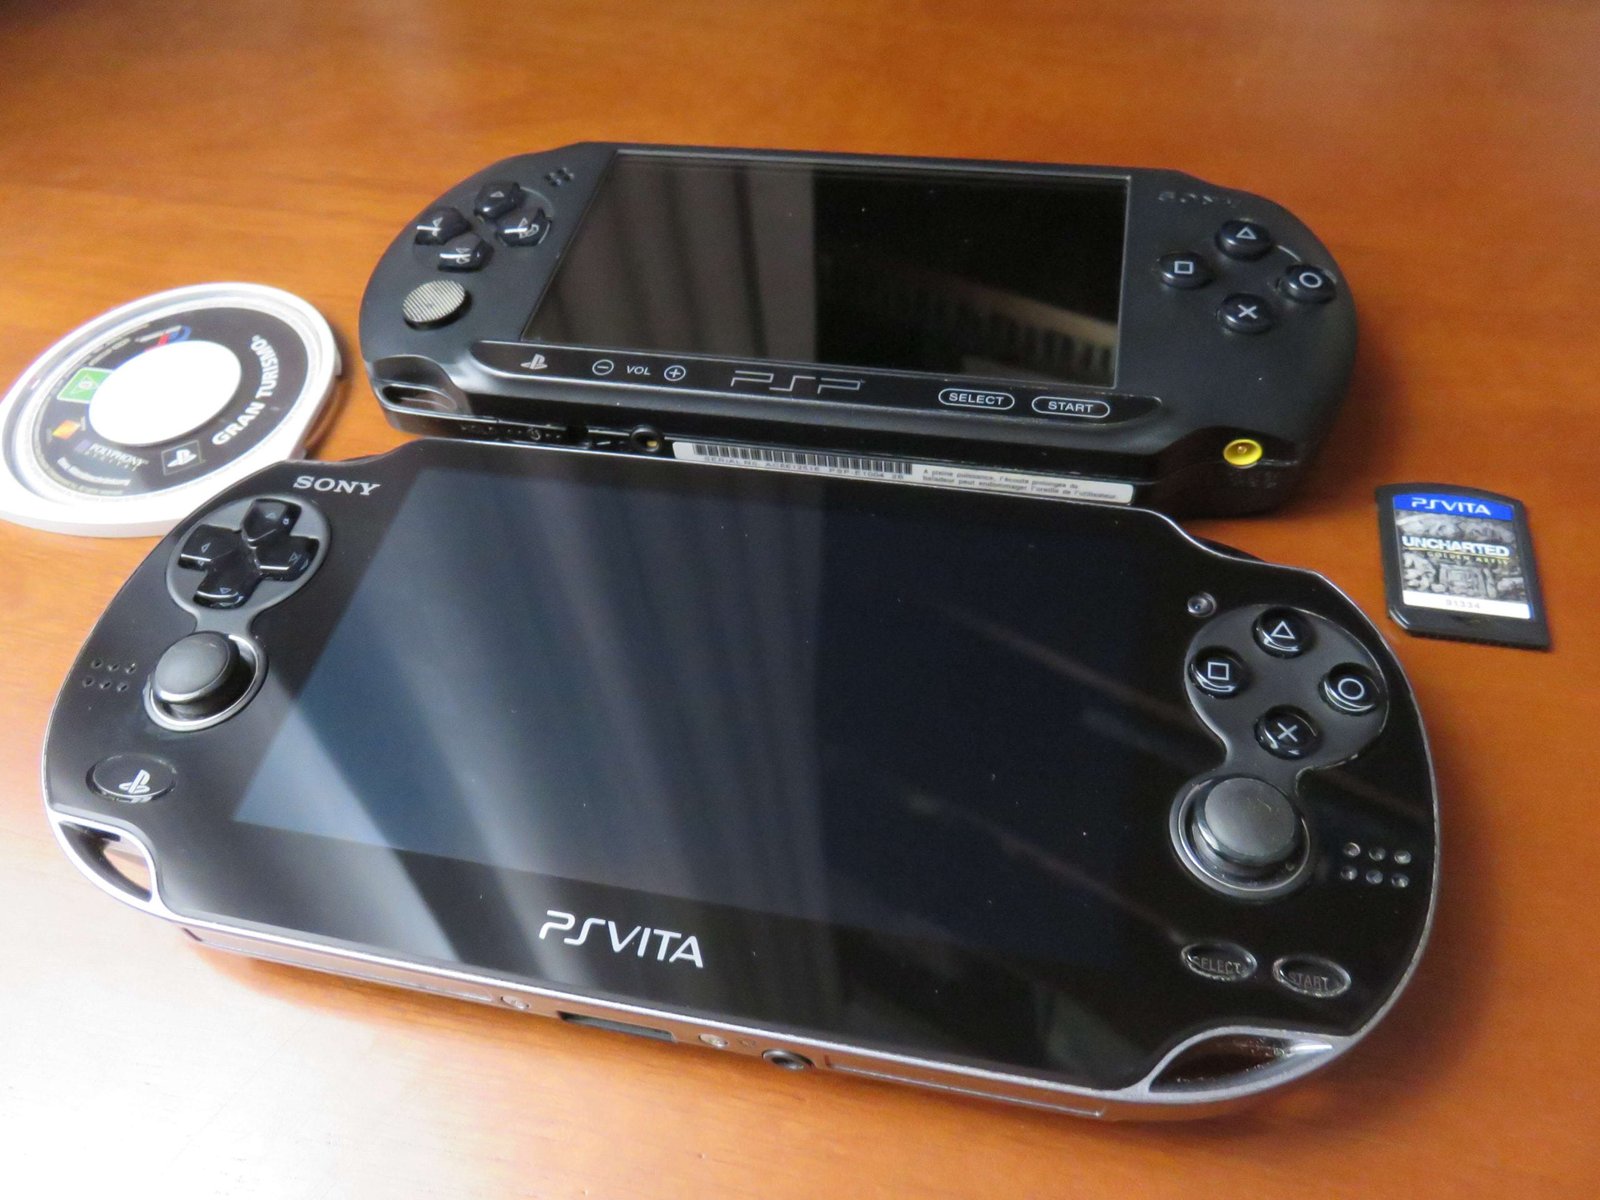 Imagem do console PlayStation Vita